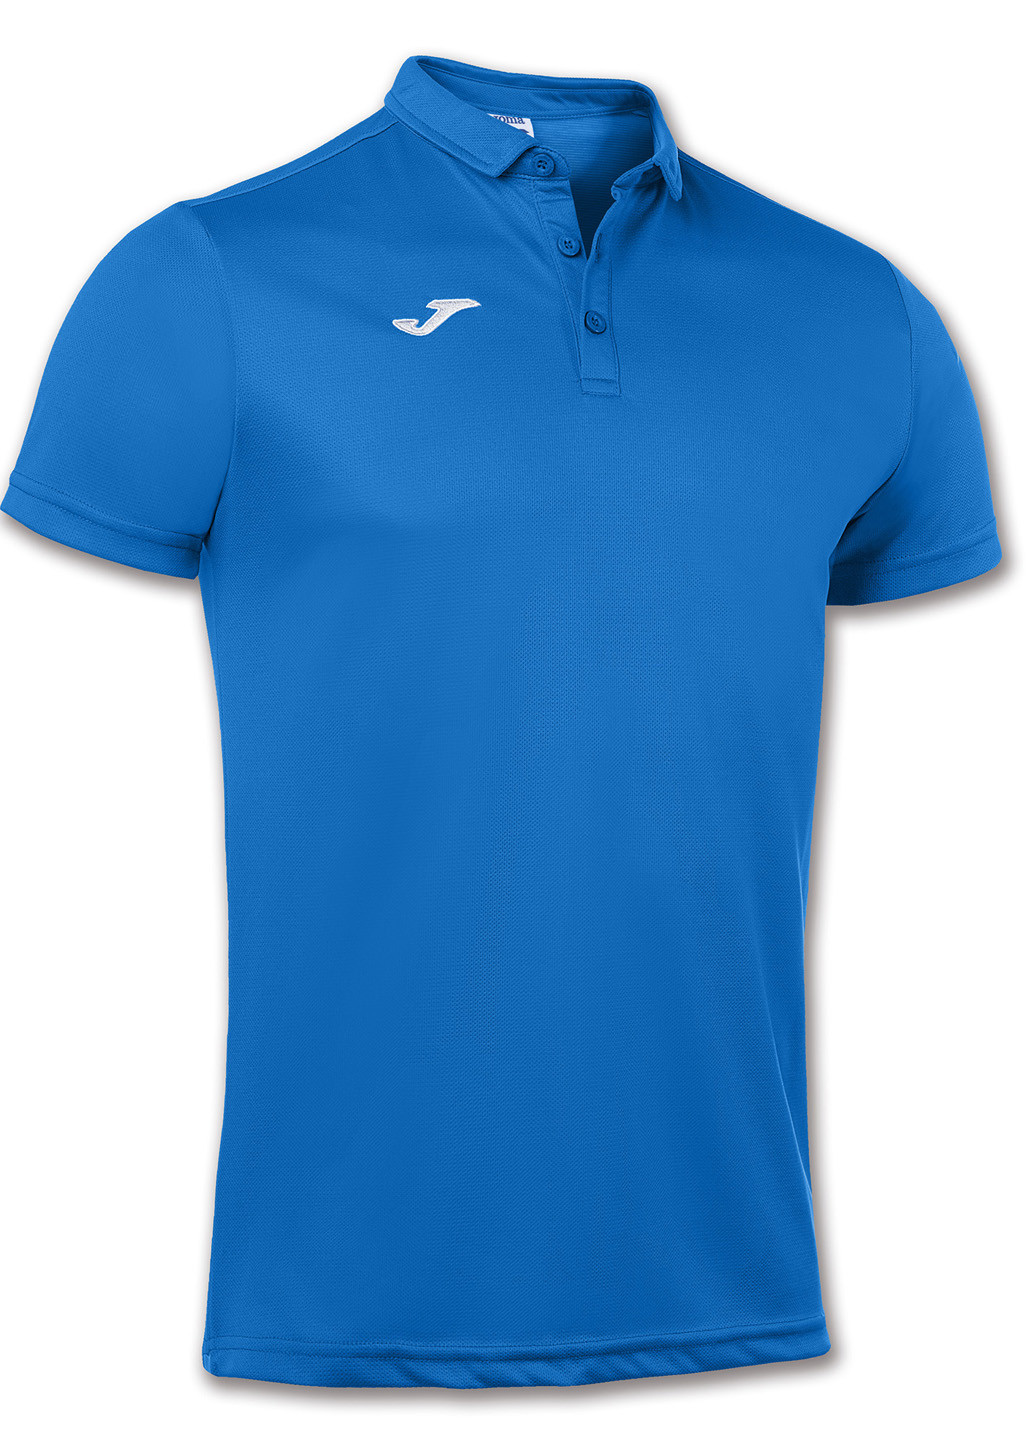 Синяя футболка-поло для мужчин Joma с логотипом